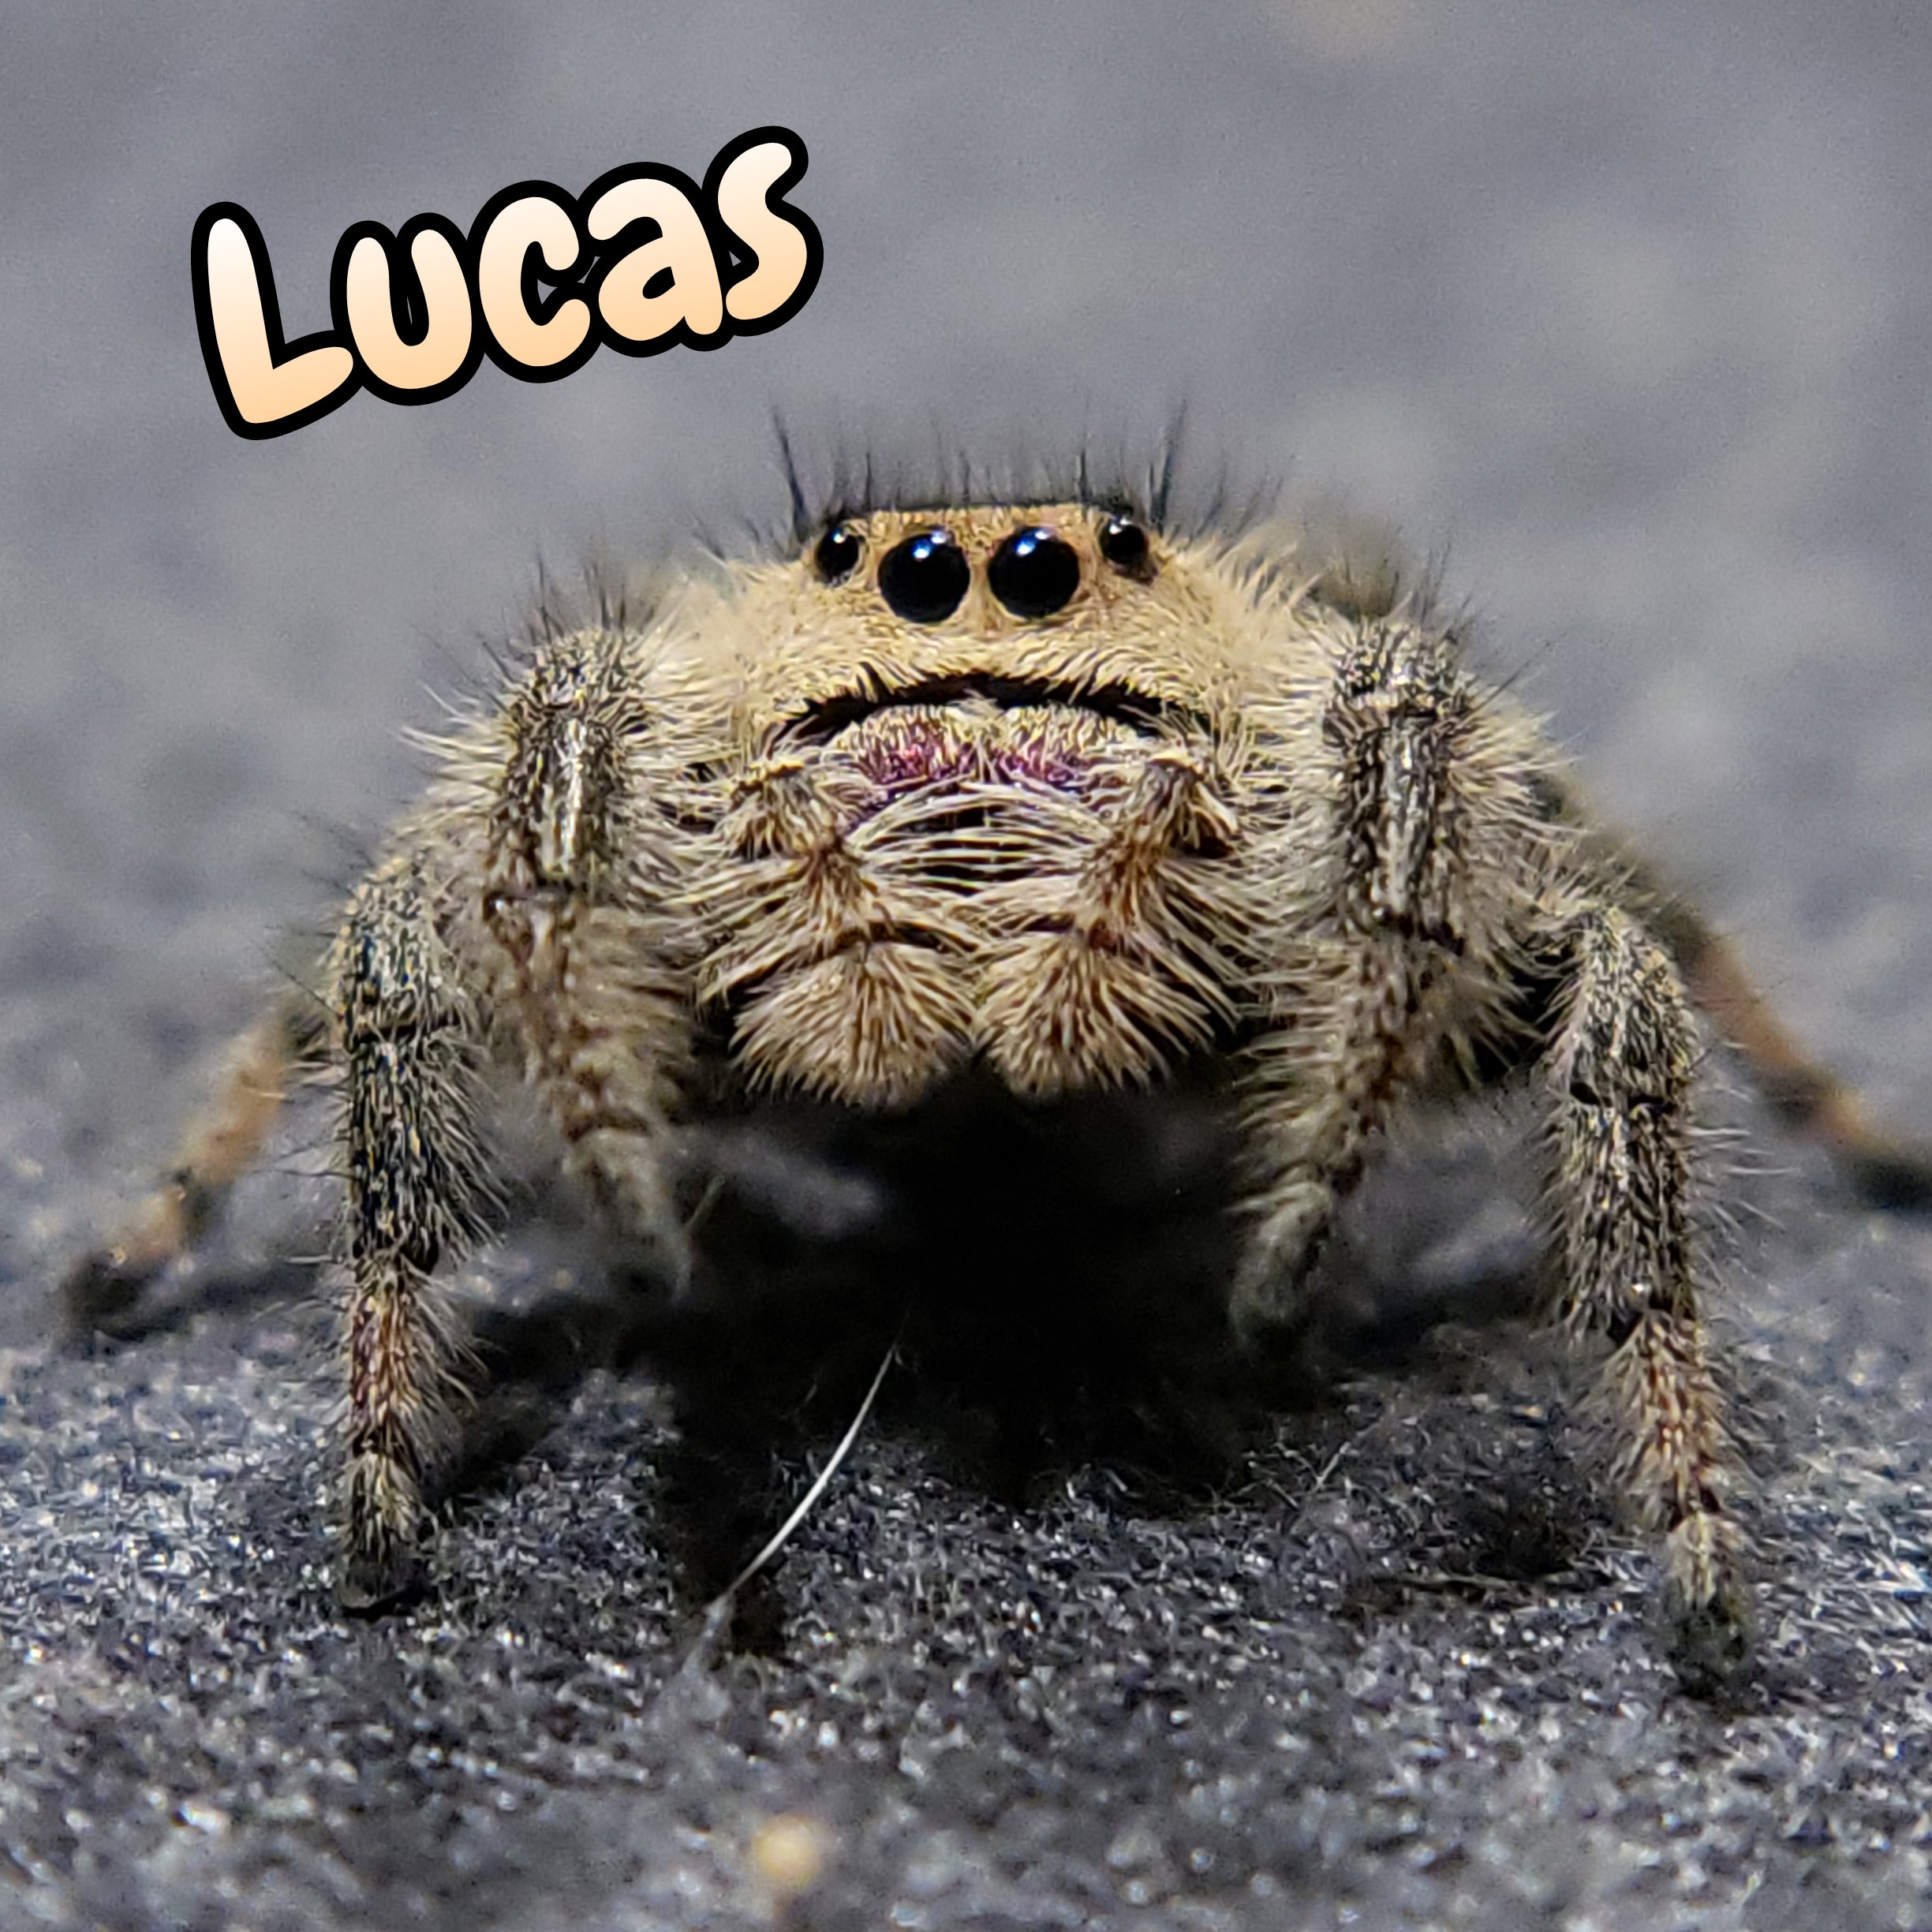 Regal Jumping Spider "Lucas"